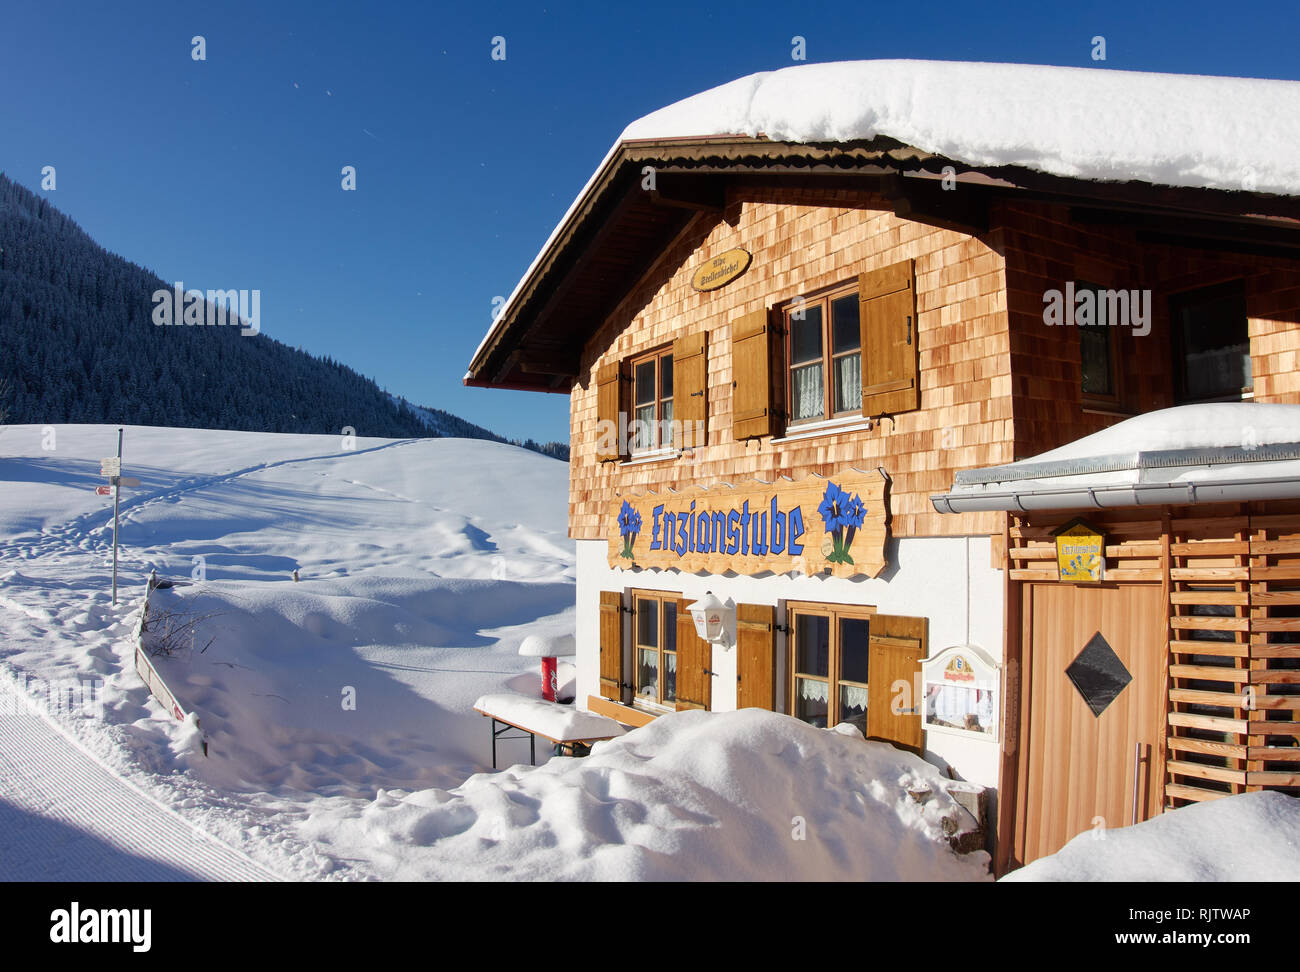 Ski arena with Alpspitzbahn cable car at the mountain Alpspitz in Nesselwang, Allgäu, Bavaria, Germany, February 04, 2019.  After heavy snowfall the l Stock Photo